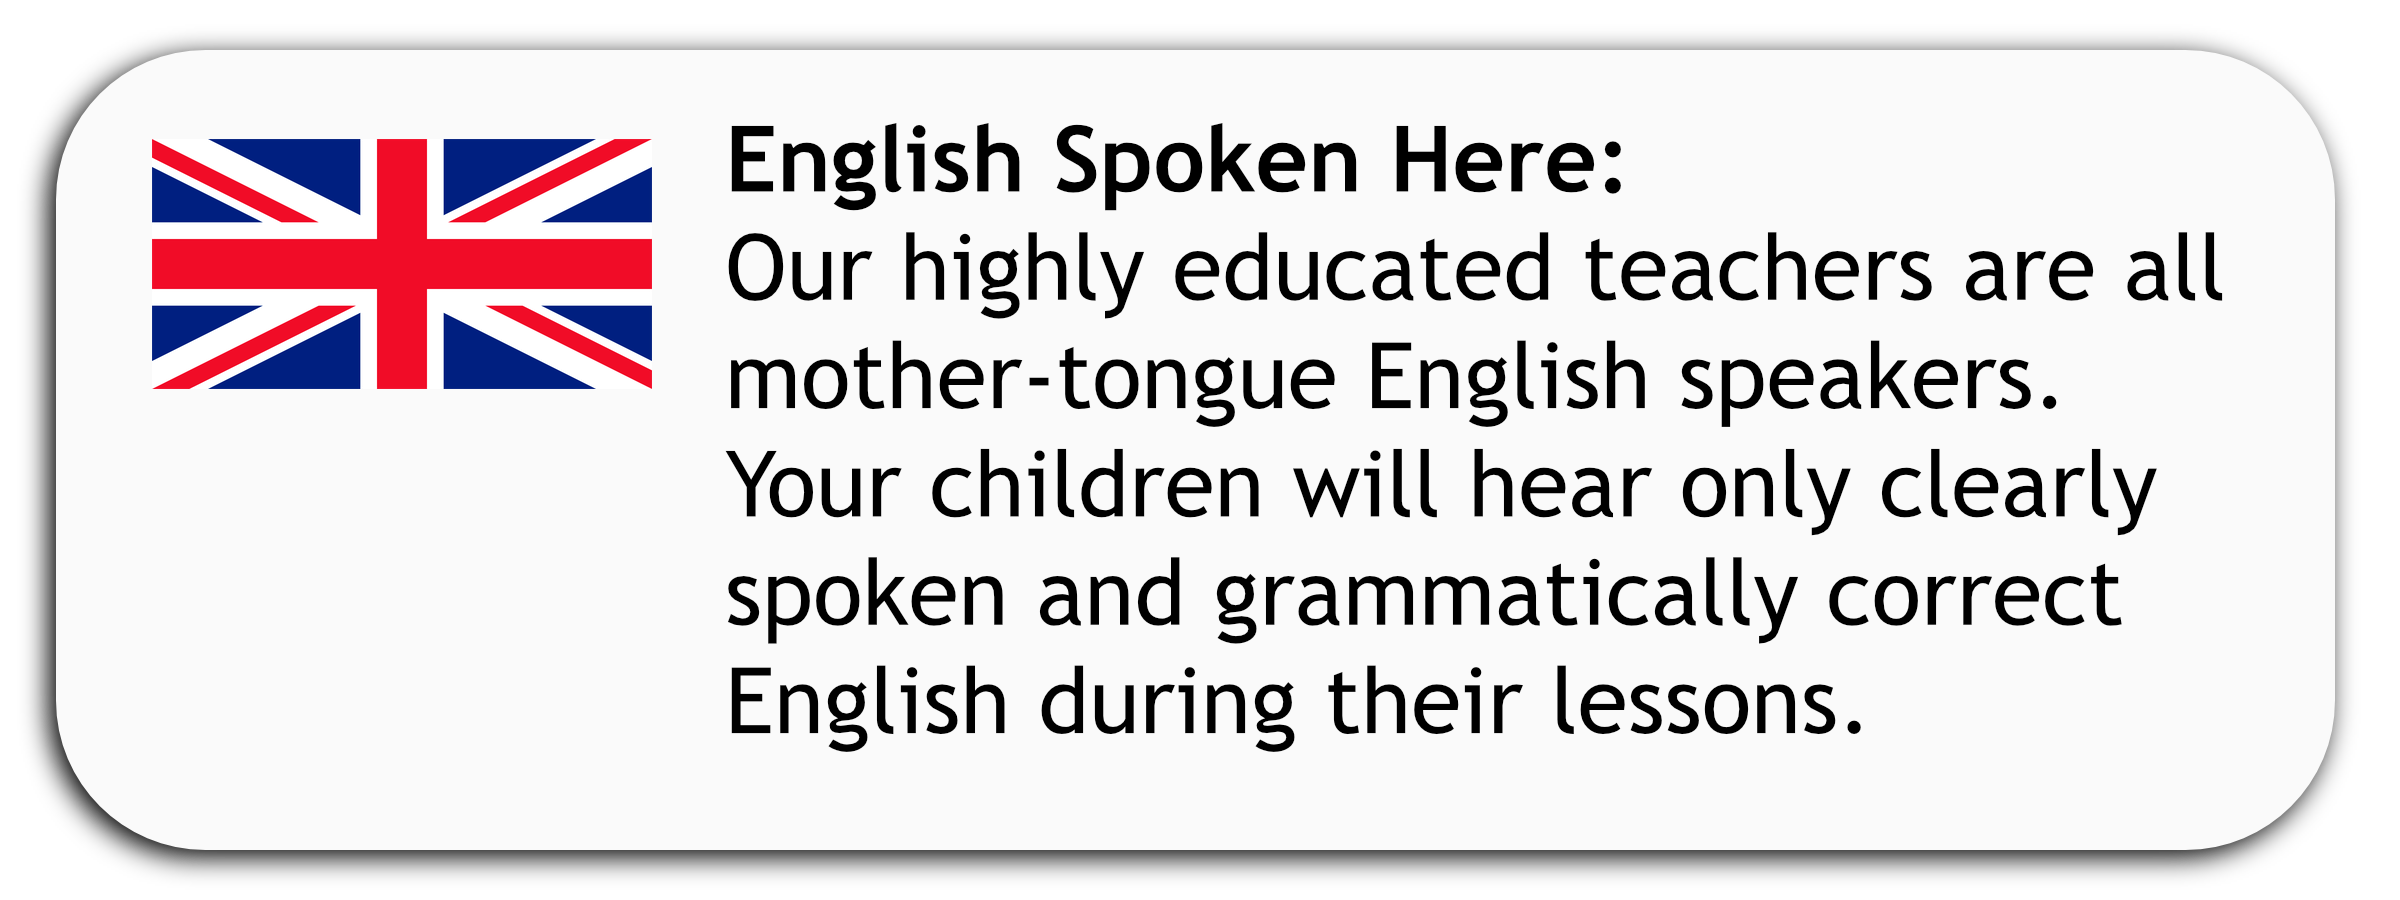 English Spoken Here